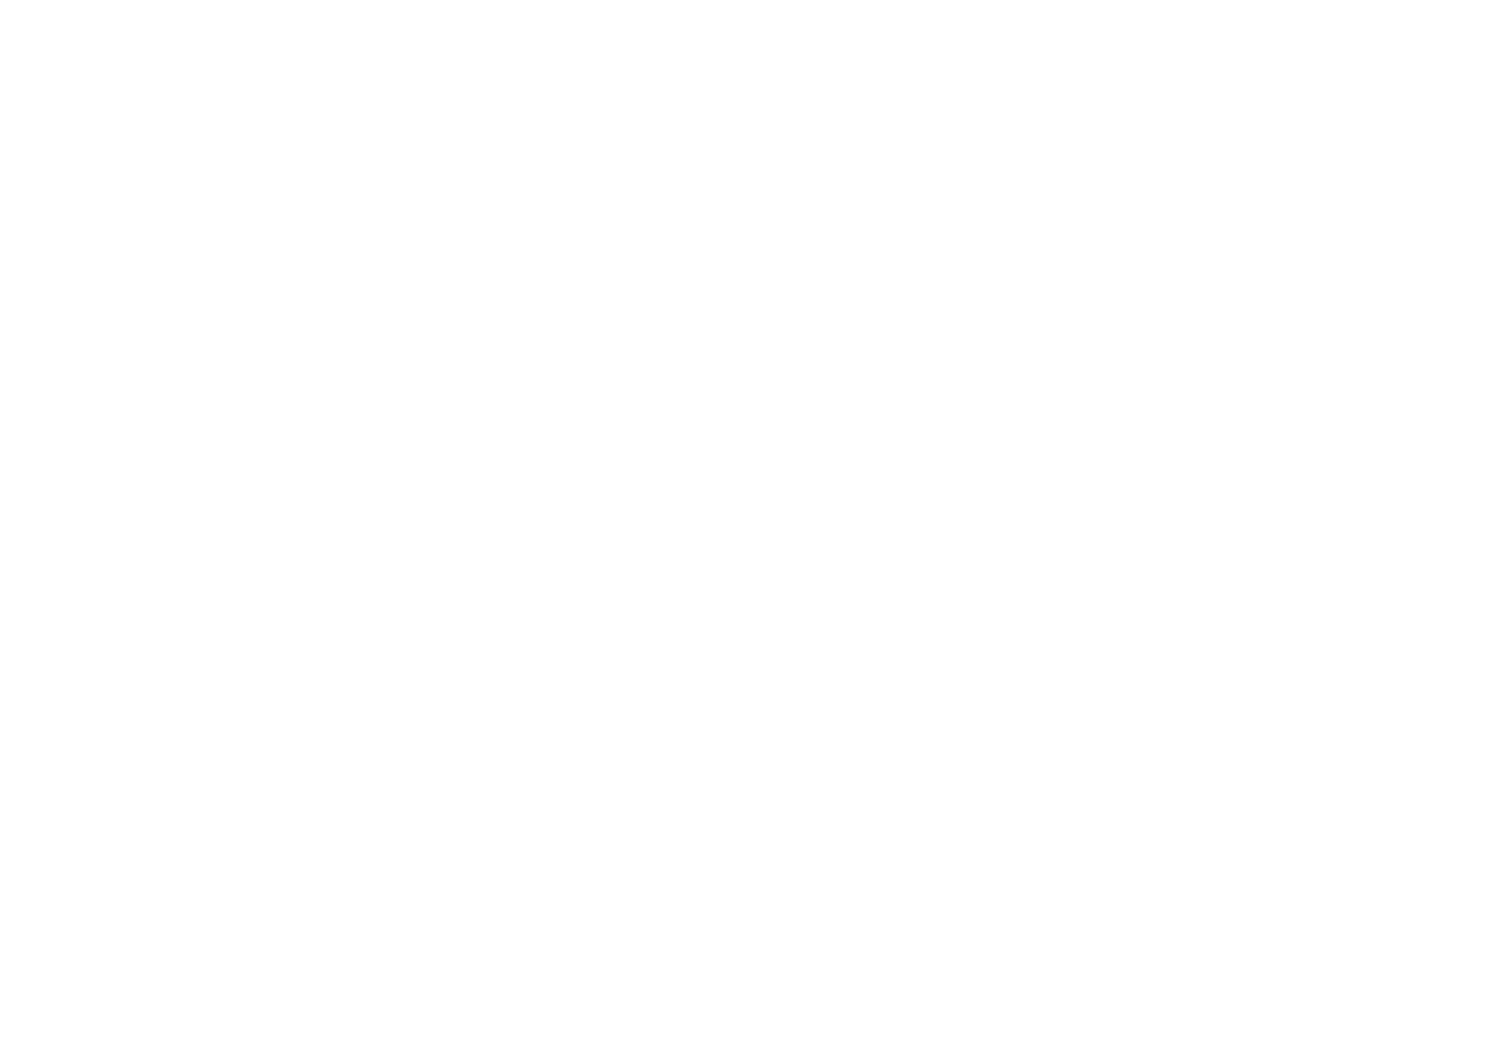 KENDALL GENDER